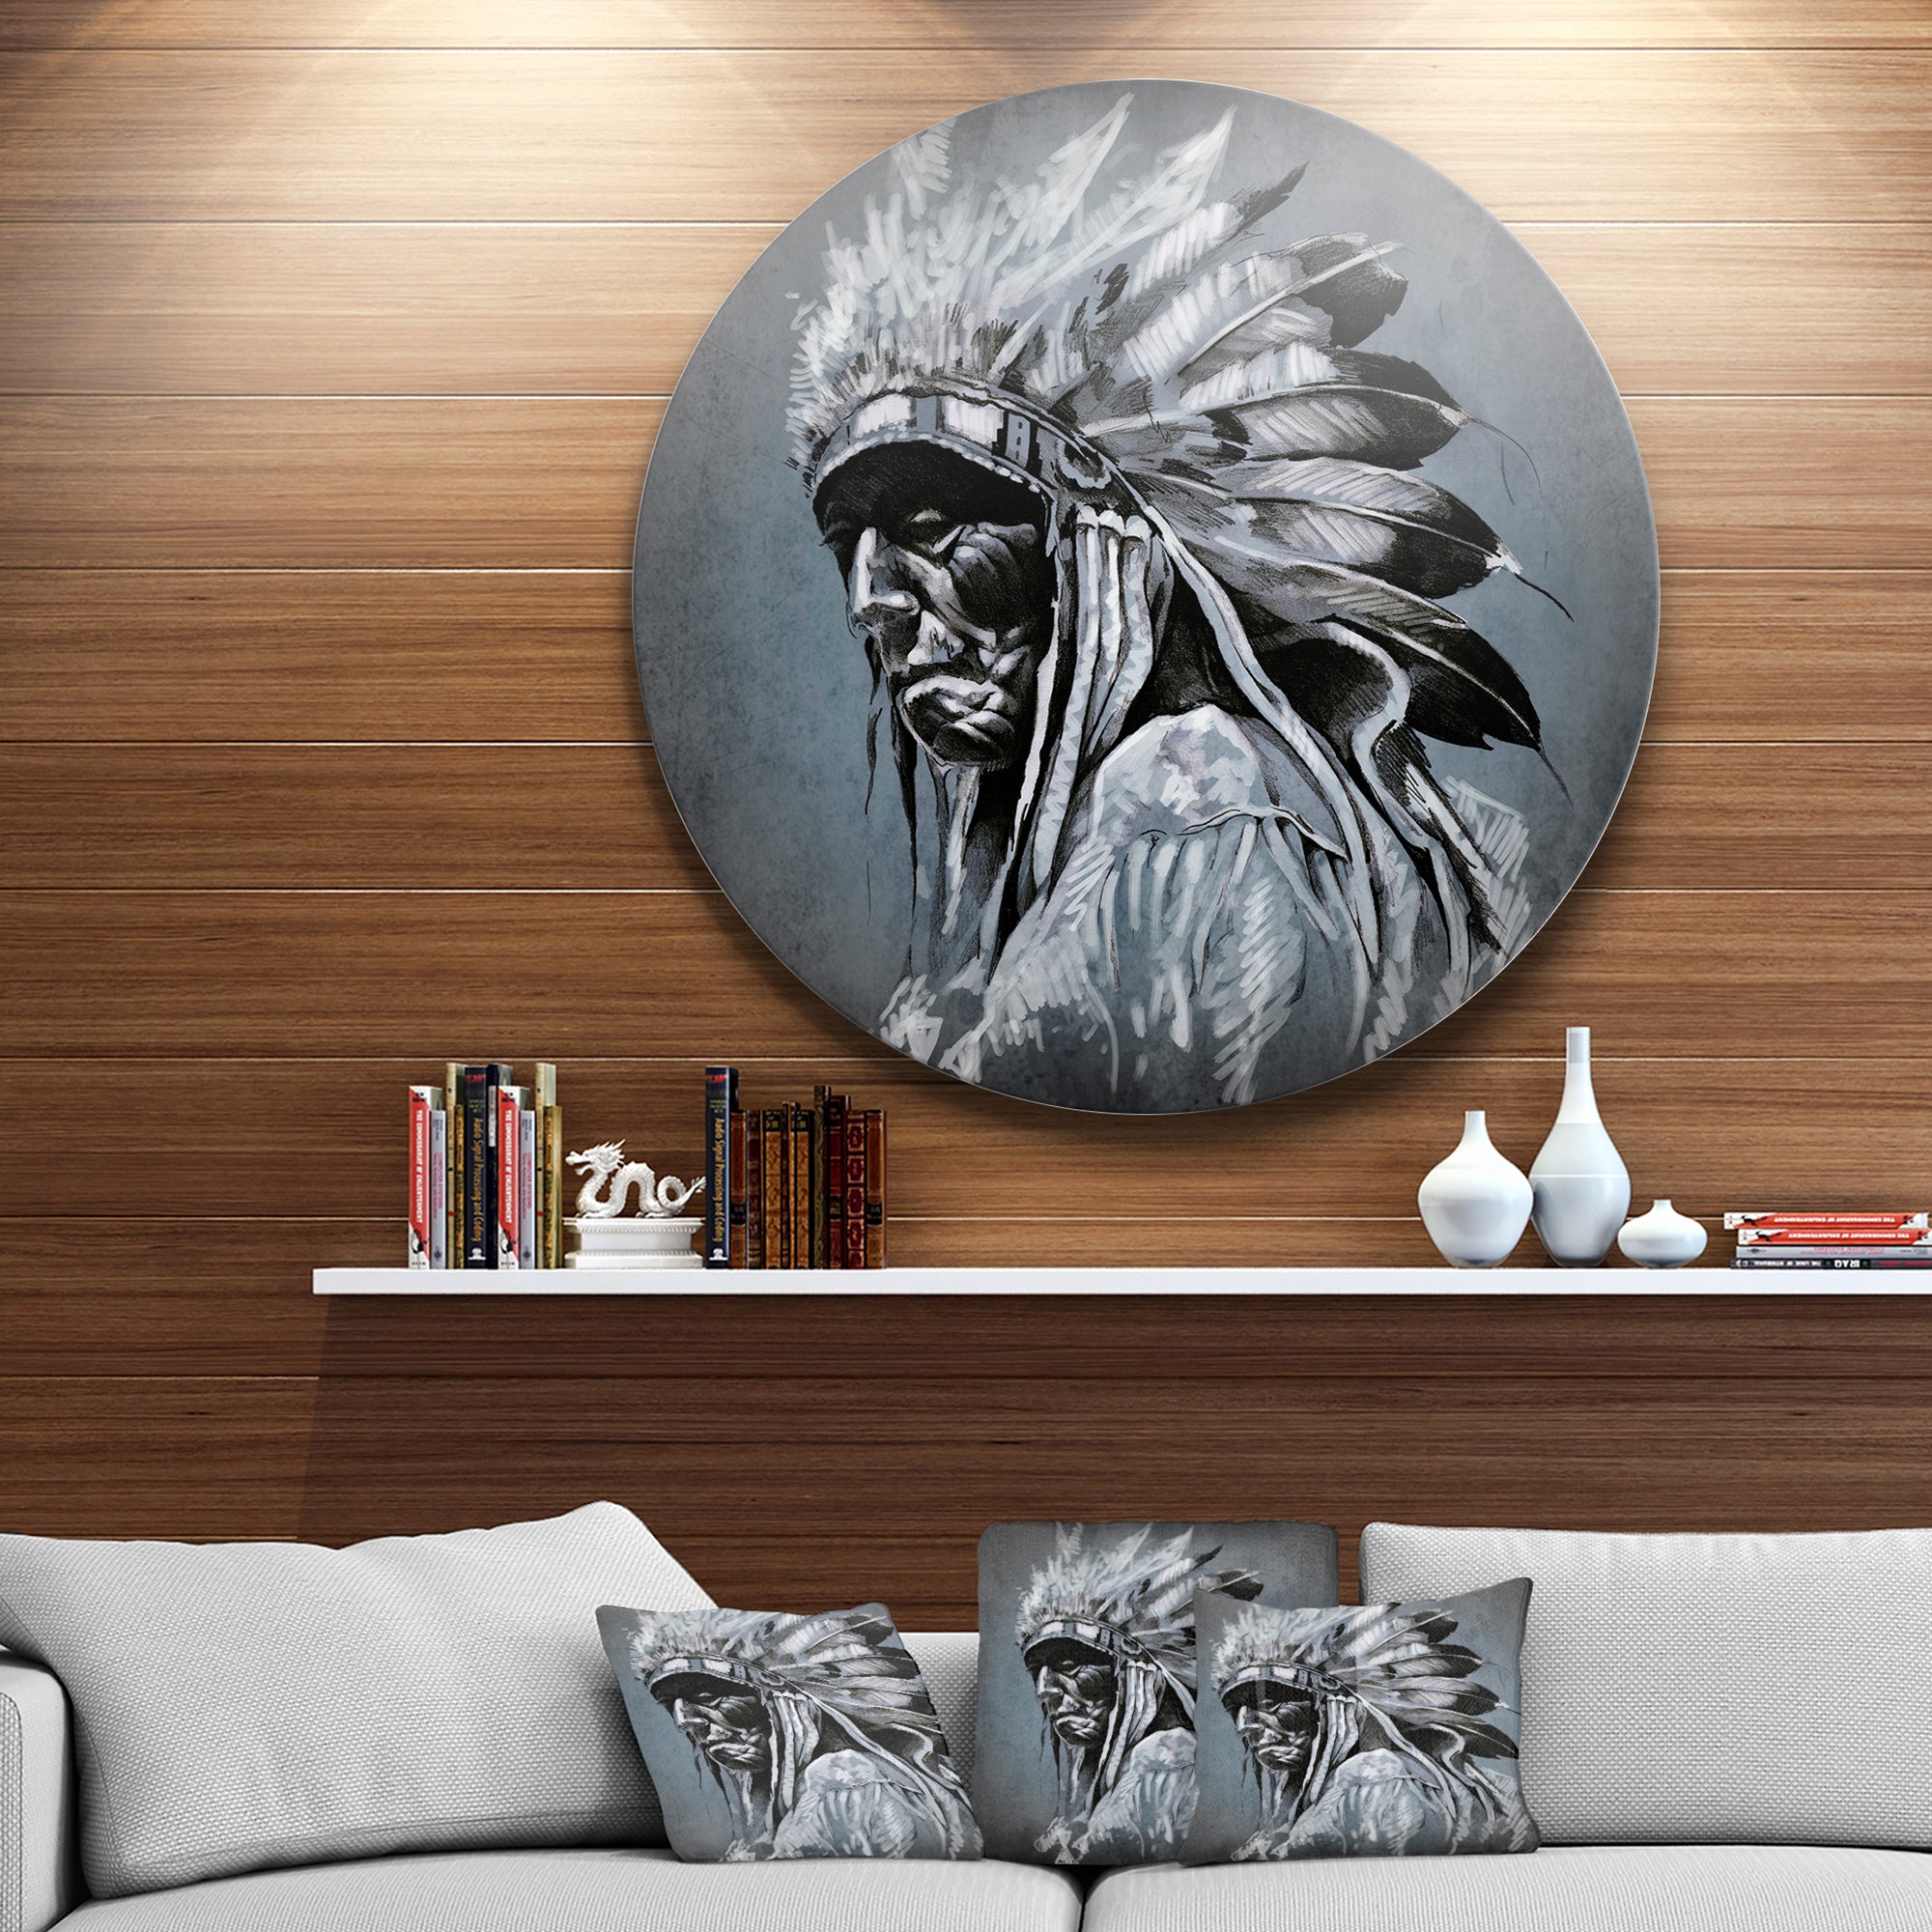 American Indian Tattoo Art' Portrait Circle Metal Wall Art